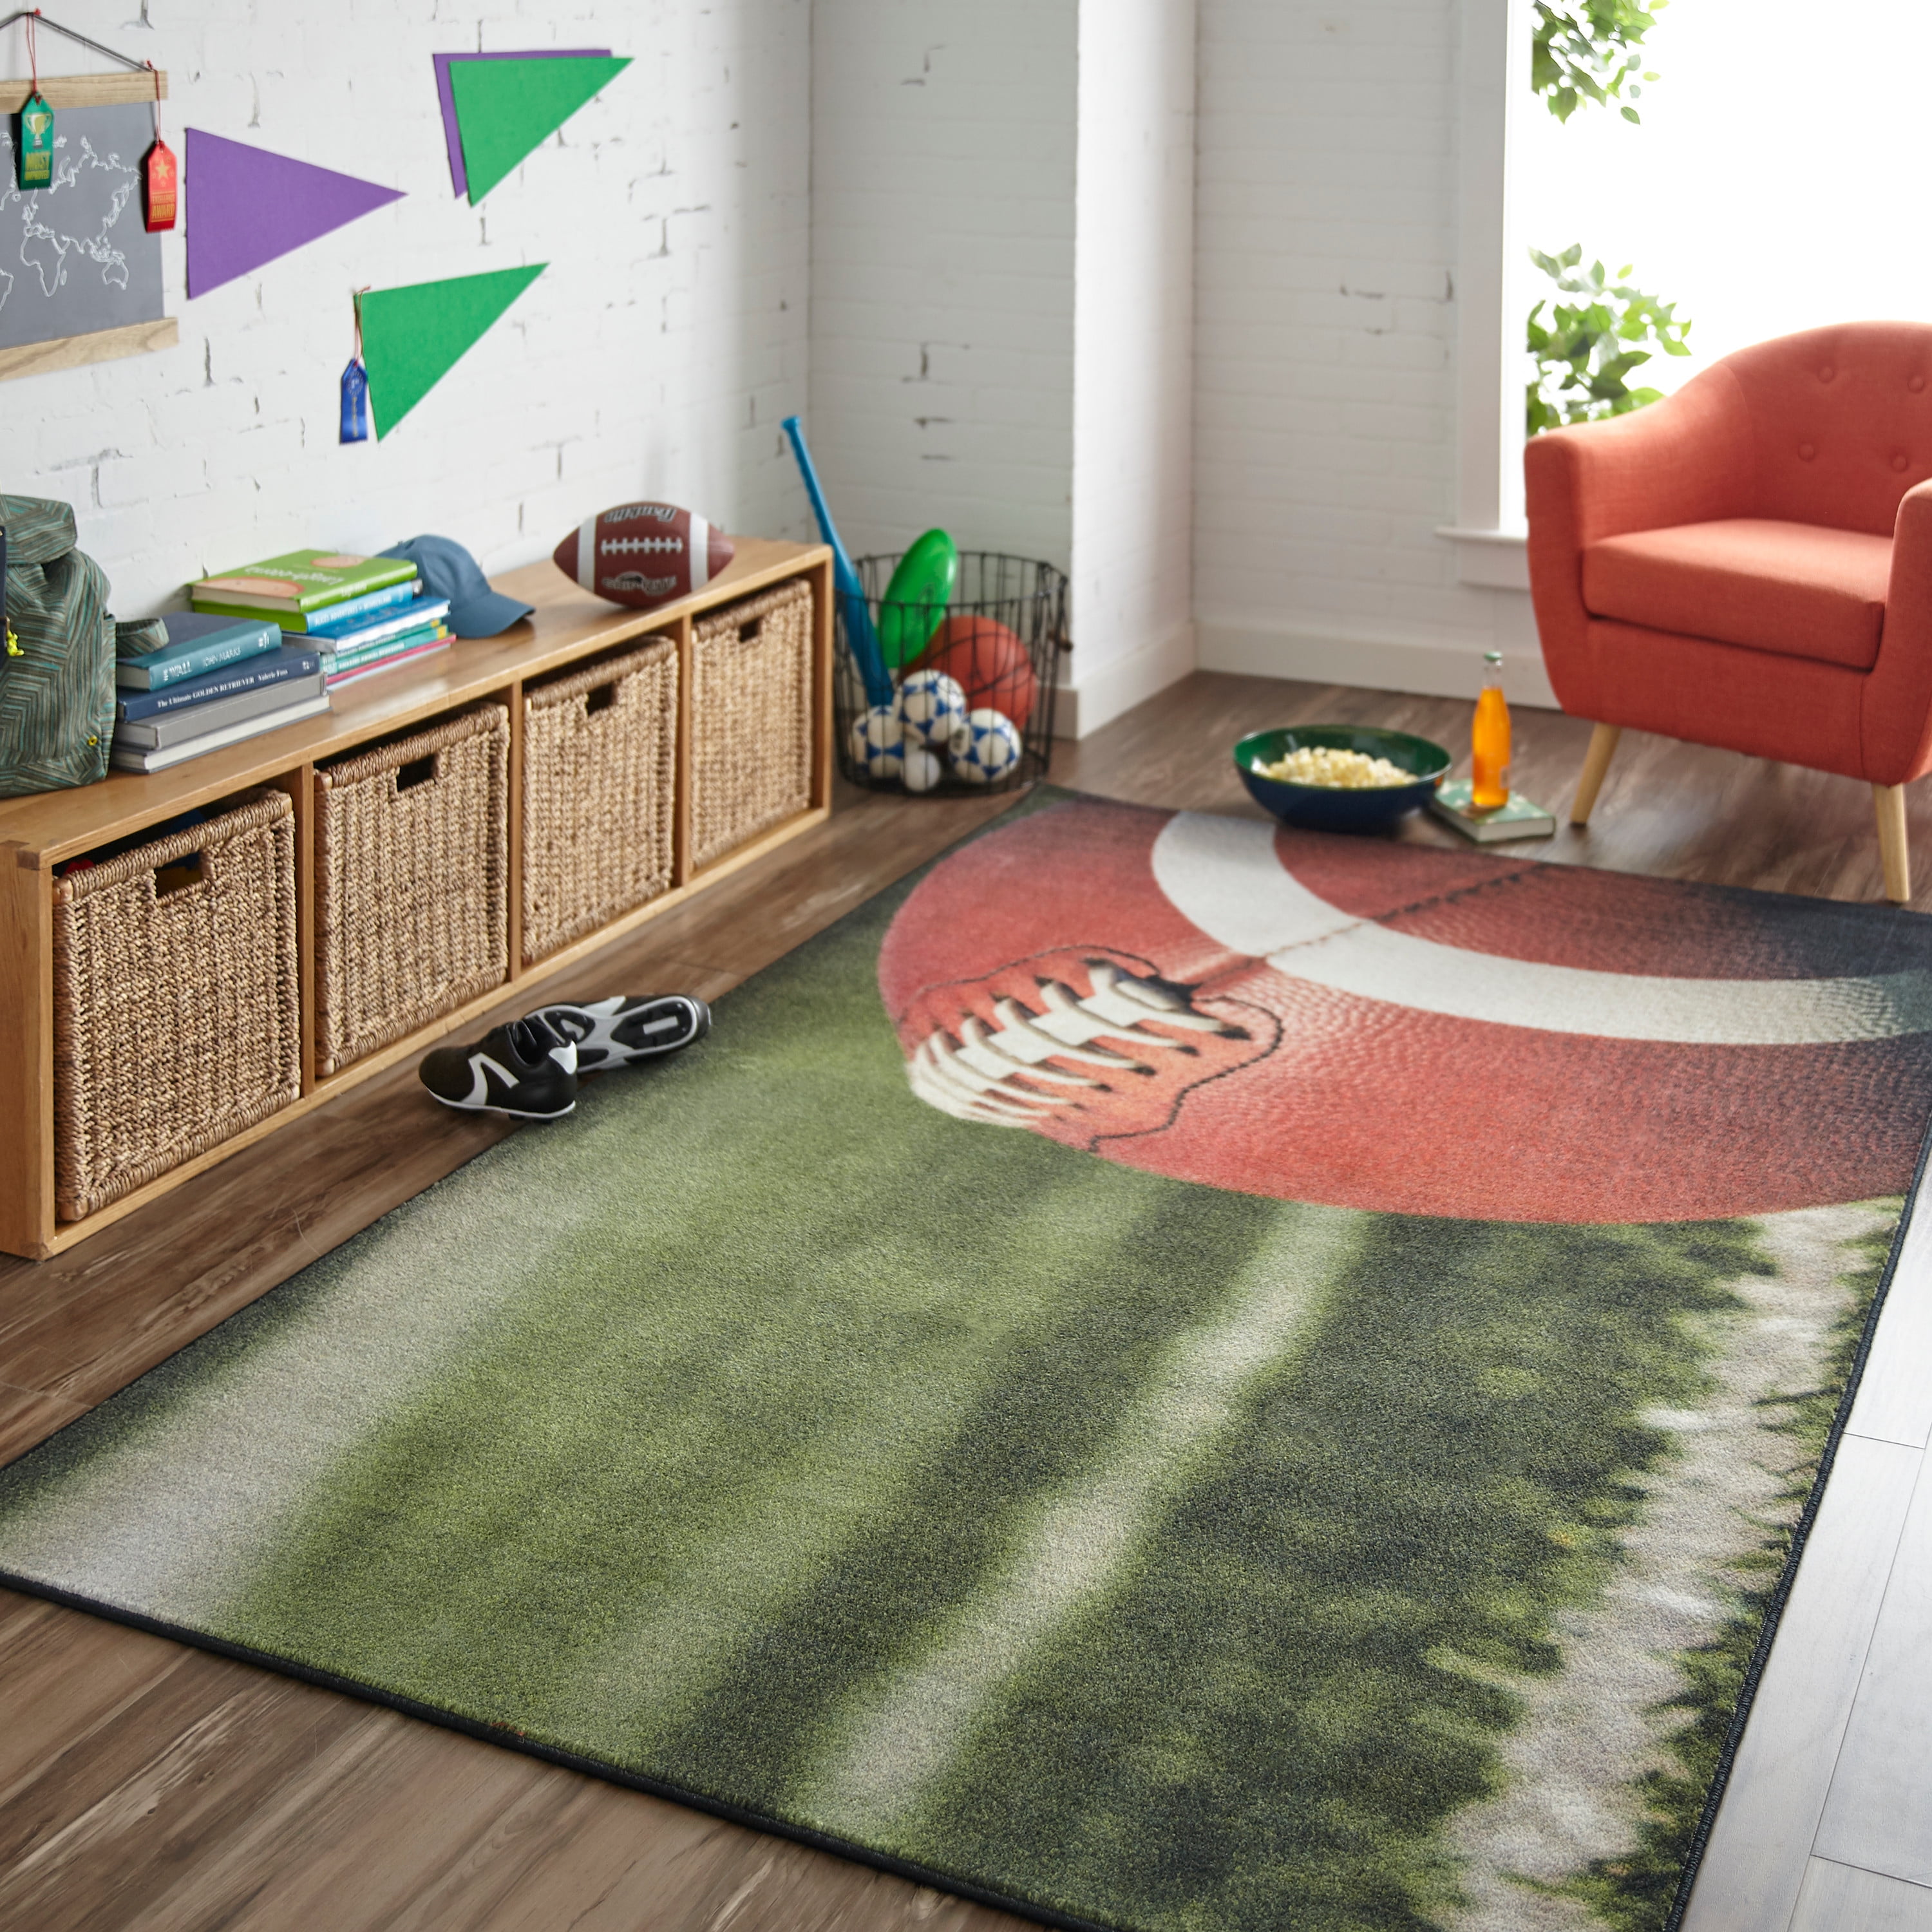 3D Football Field Area Rug Non-Slip Doormat Kids Sports Floor Carpet Decor 